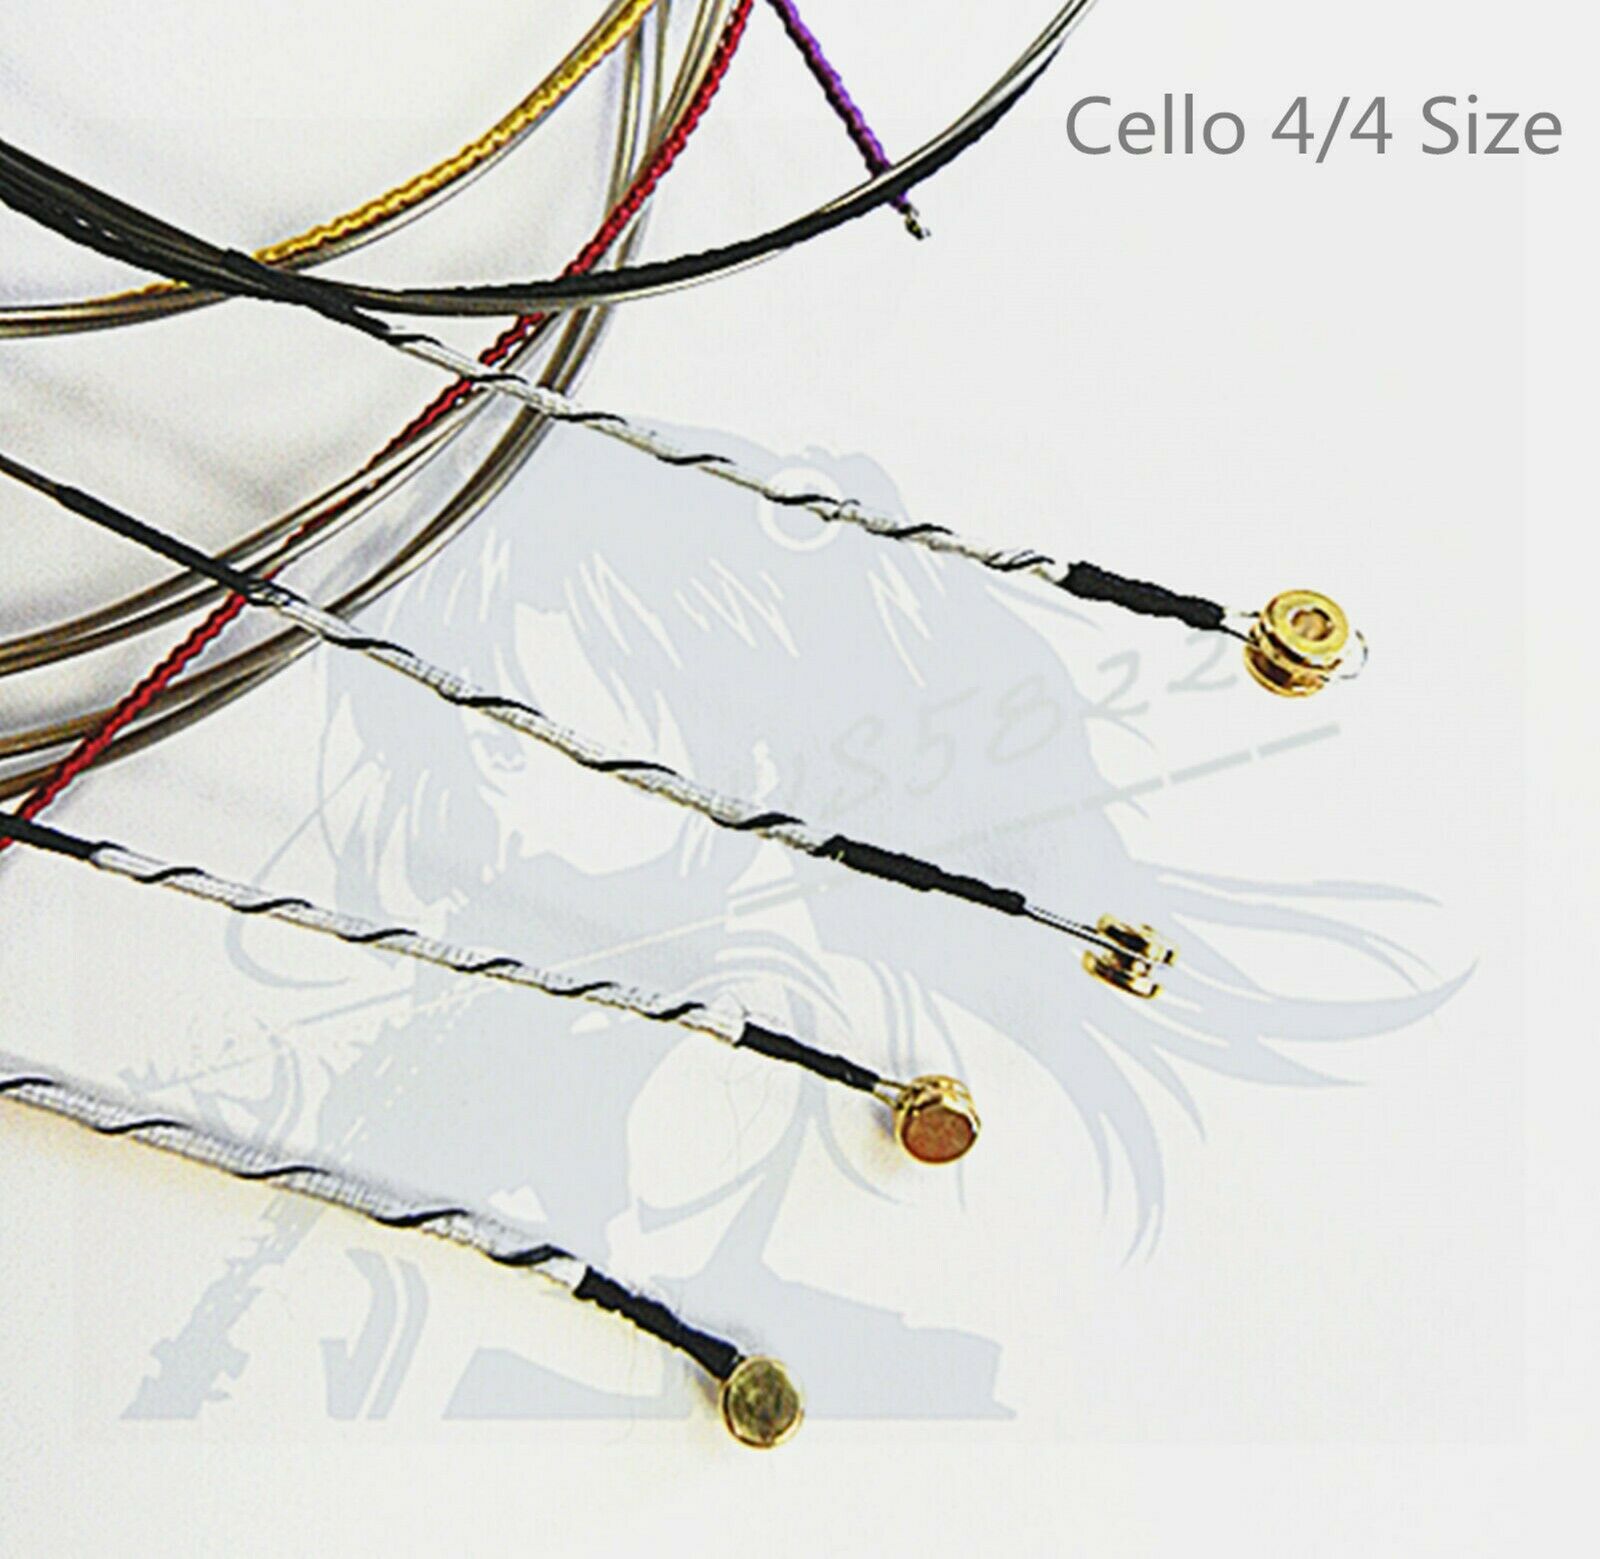 Kaplan Cello Strings,4/4 Size Set ( Oem Packing For Best Price) Medium